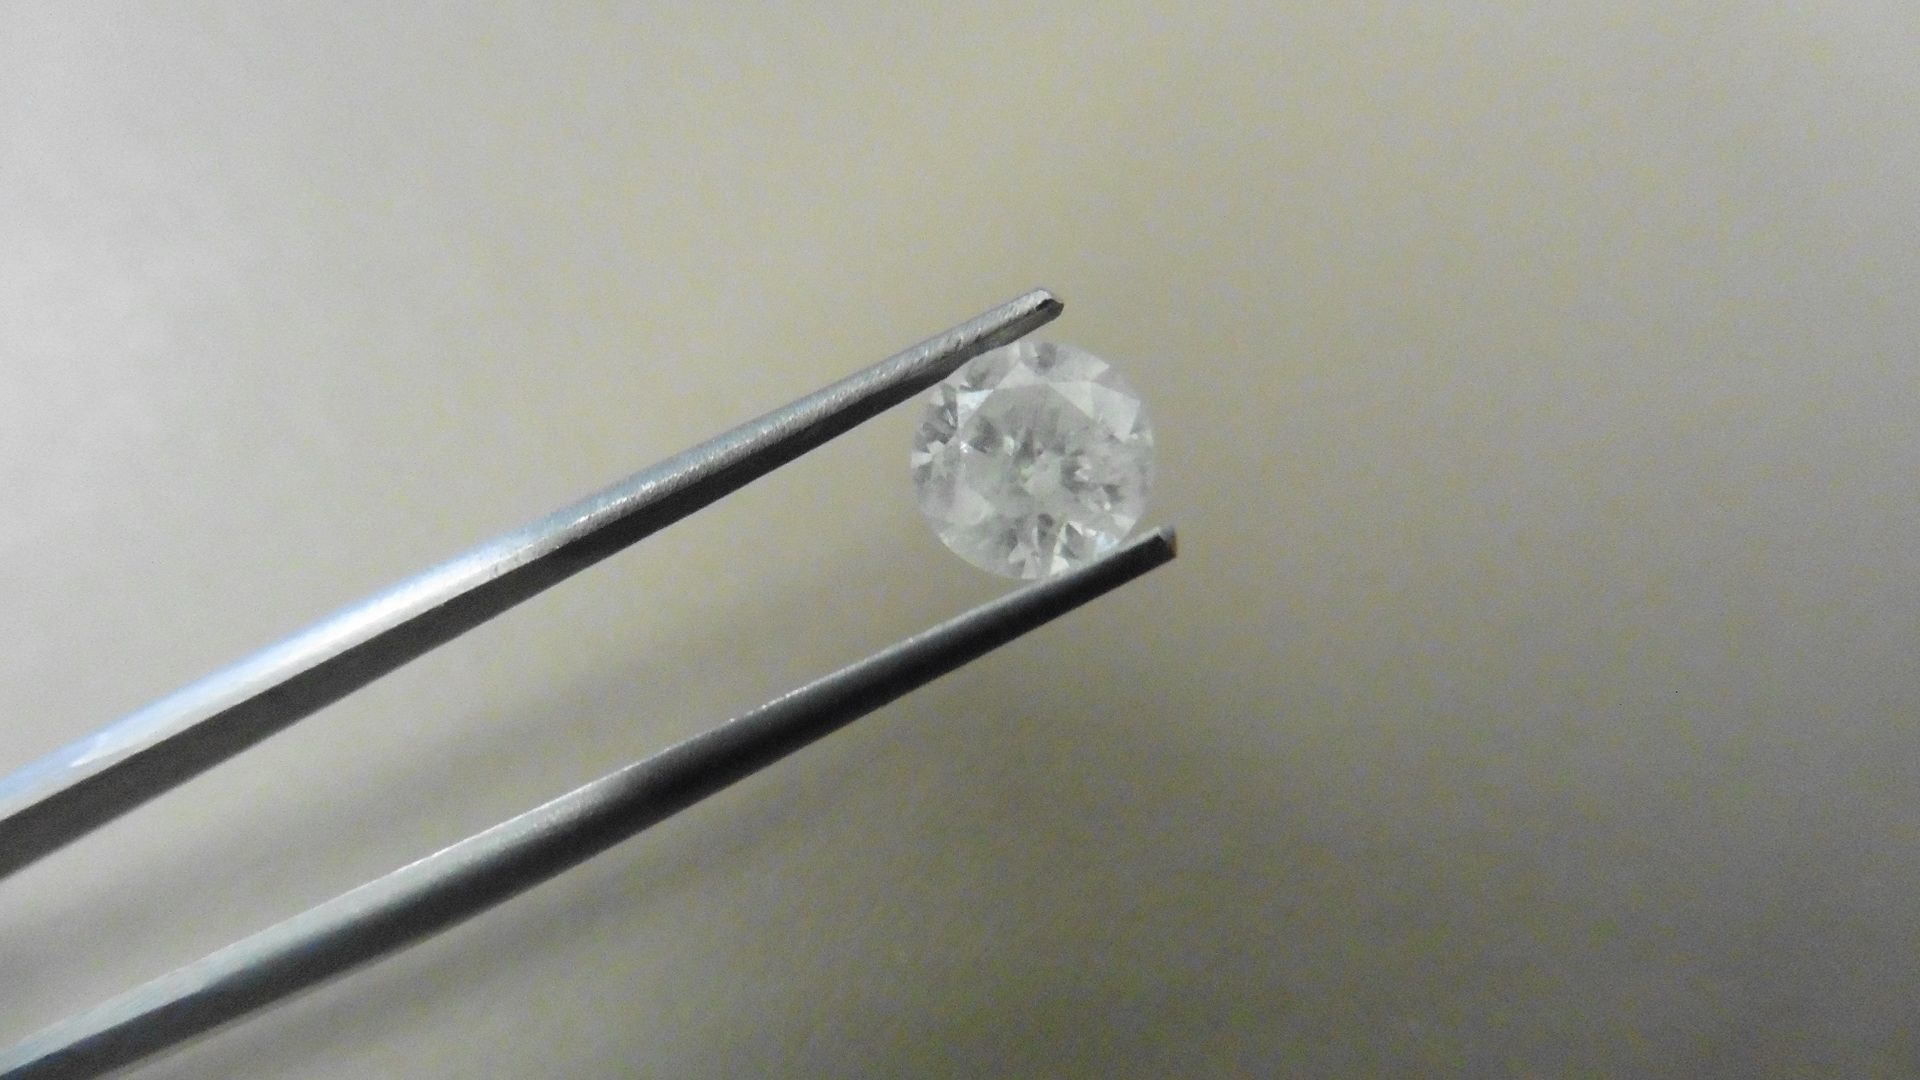 1.17ct Brilliant Cut Diamond, Enhanced stone. H colour, I2 clarity. 6.56 x 4.17mm. Valued at £1750